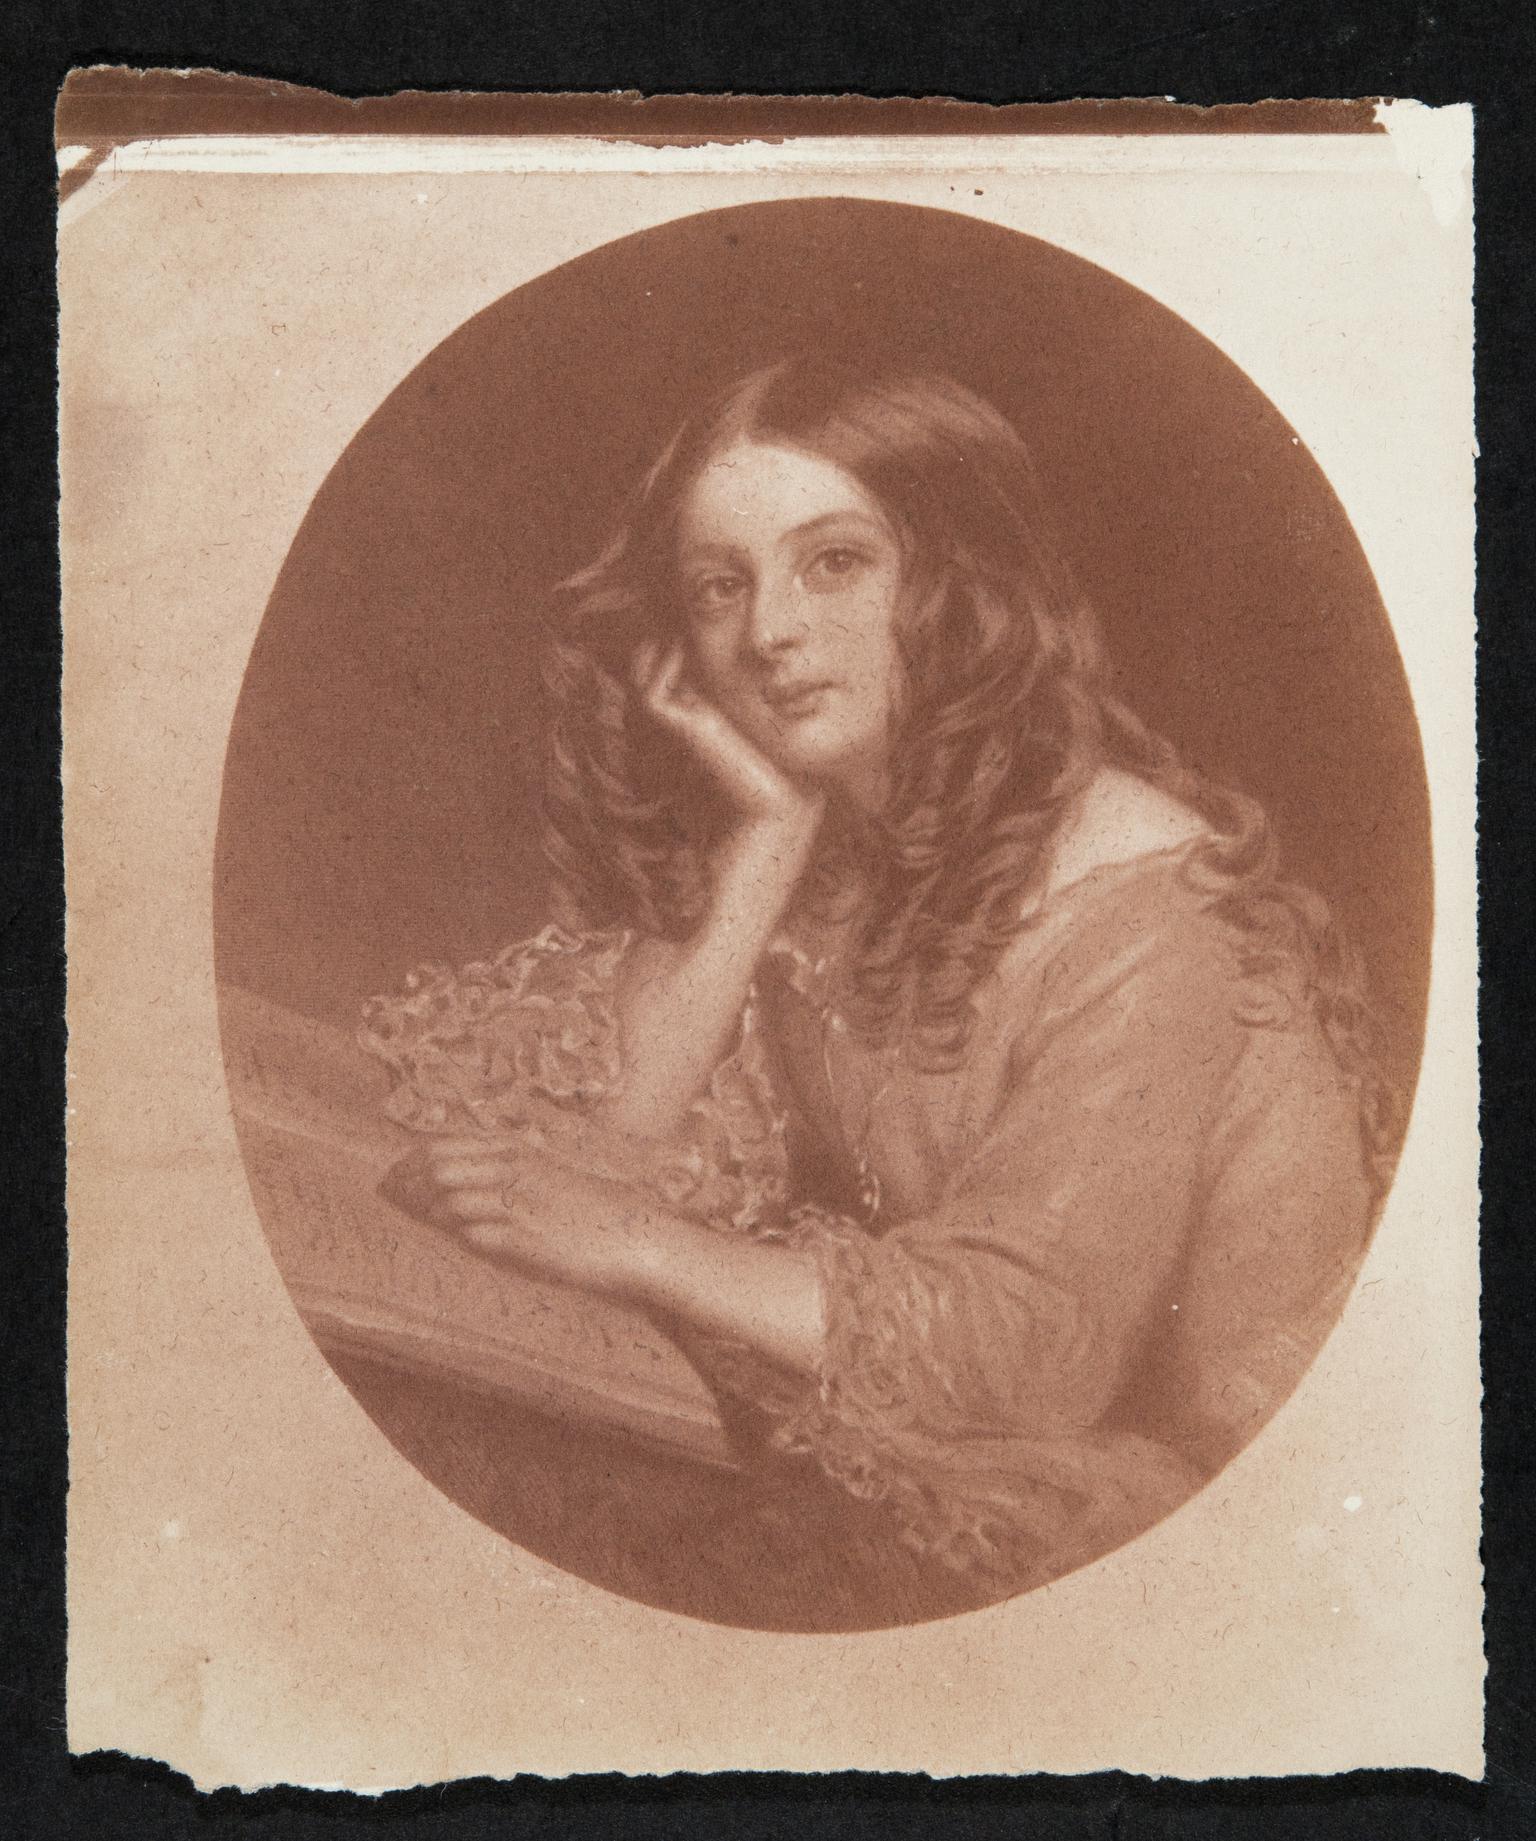 Olive Talbot, photograph